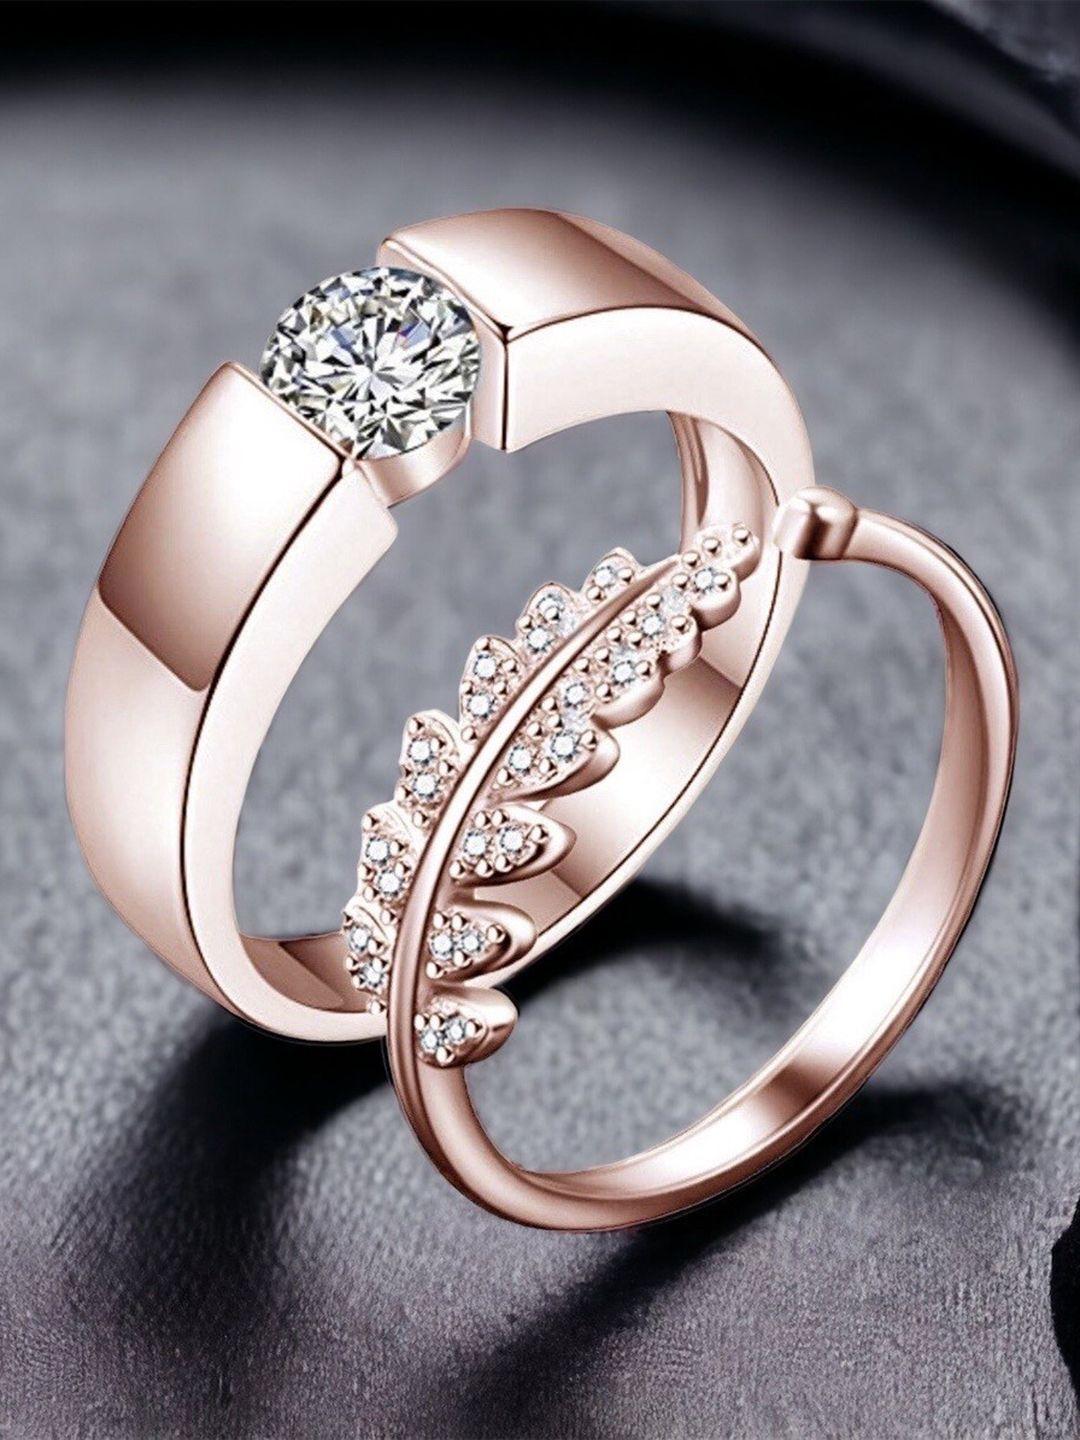 myki set of 2 rose gold-plated cz-studded couple adjustable finger rings